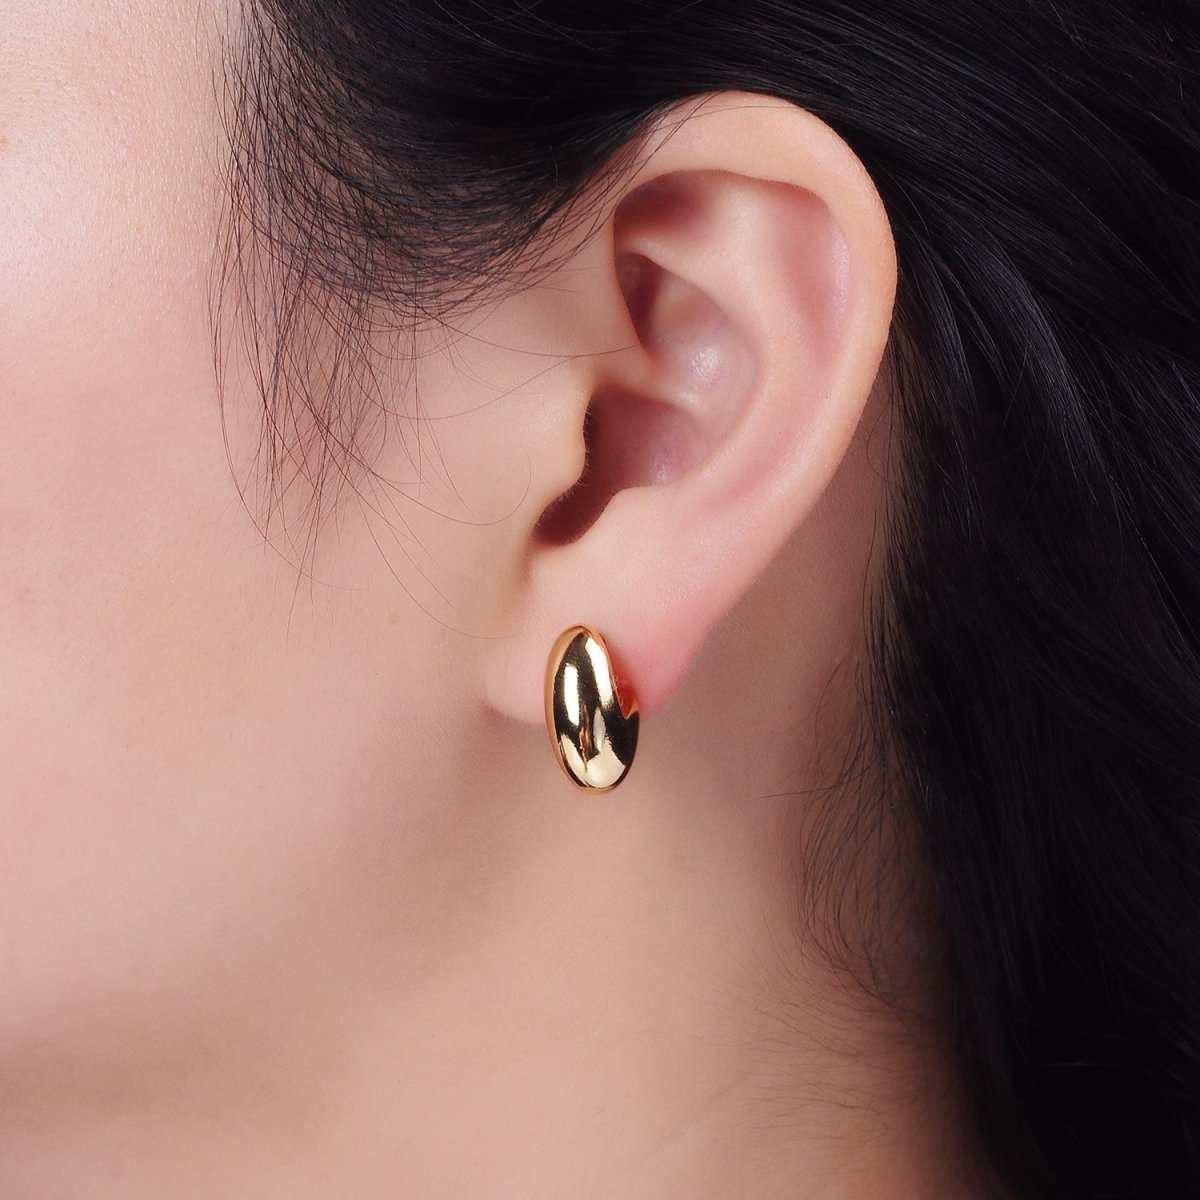 16K Gold Filled 16mm Chubby J-Shaped Cartilage Hoop Earrings | AE893 - DLUXCA